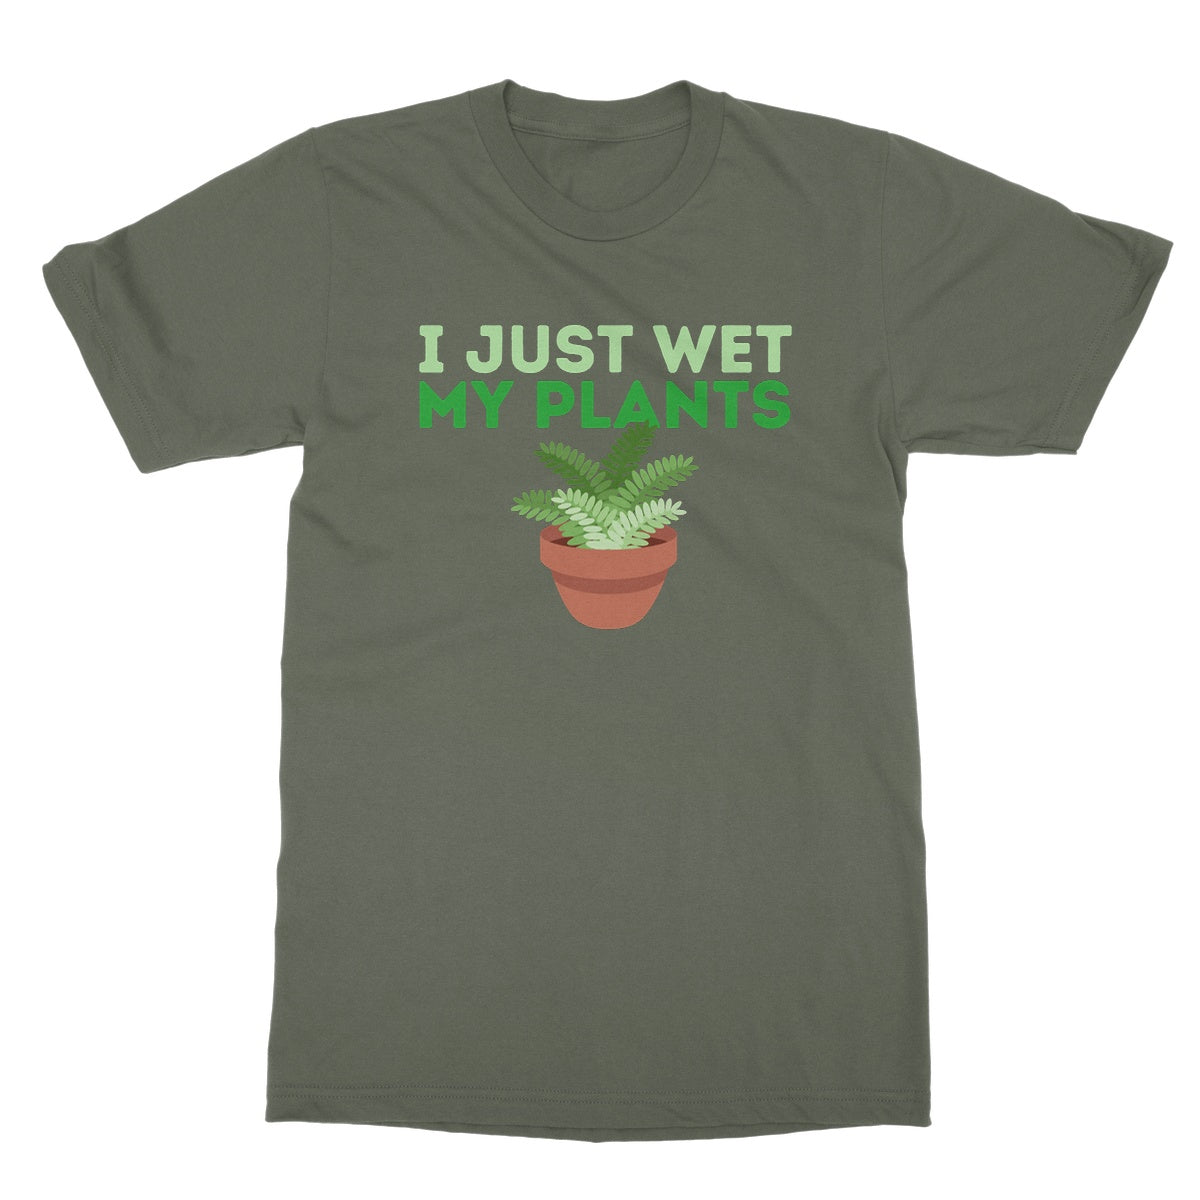 I just wet my plants t shirt green